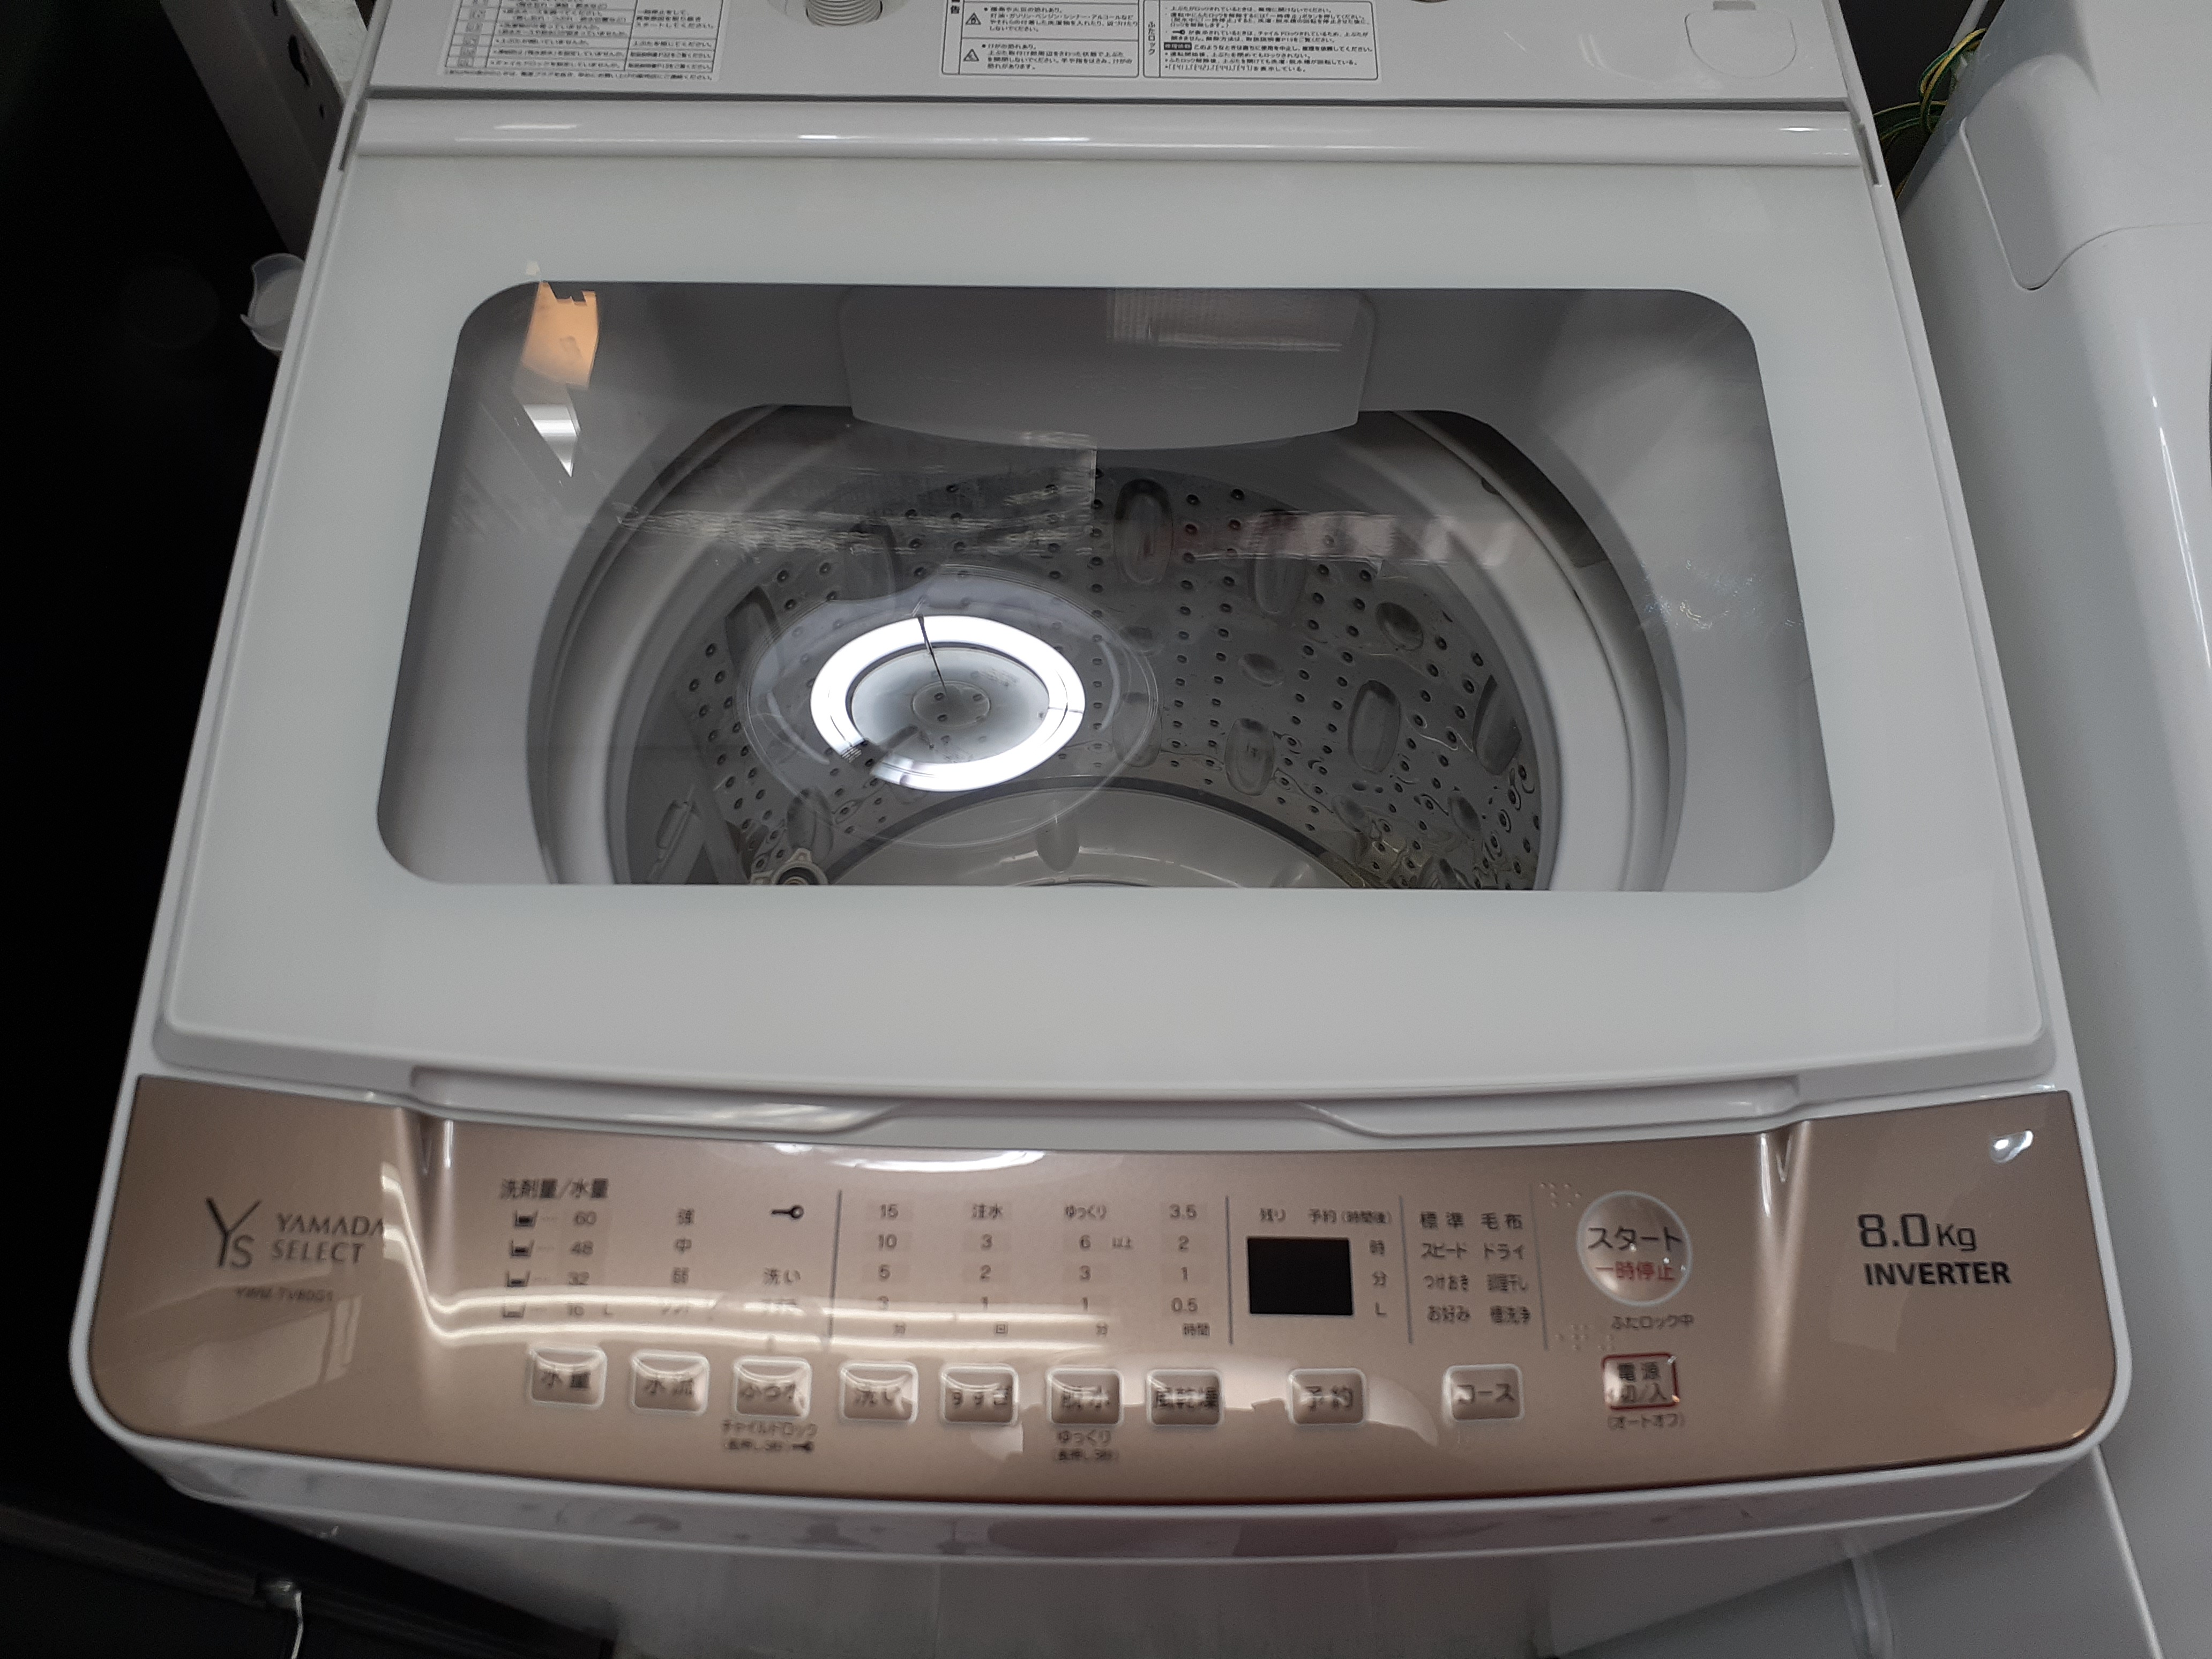 105F  ヤマダセレクト　大容量洗濯機  8kg   神奈川東京静岡配送コメントお待ちしております